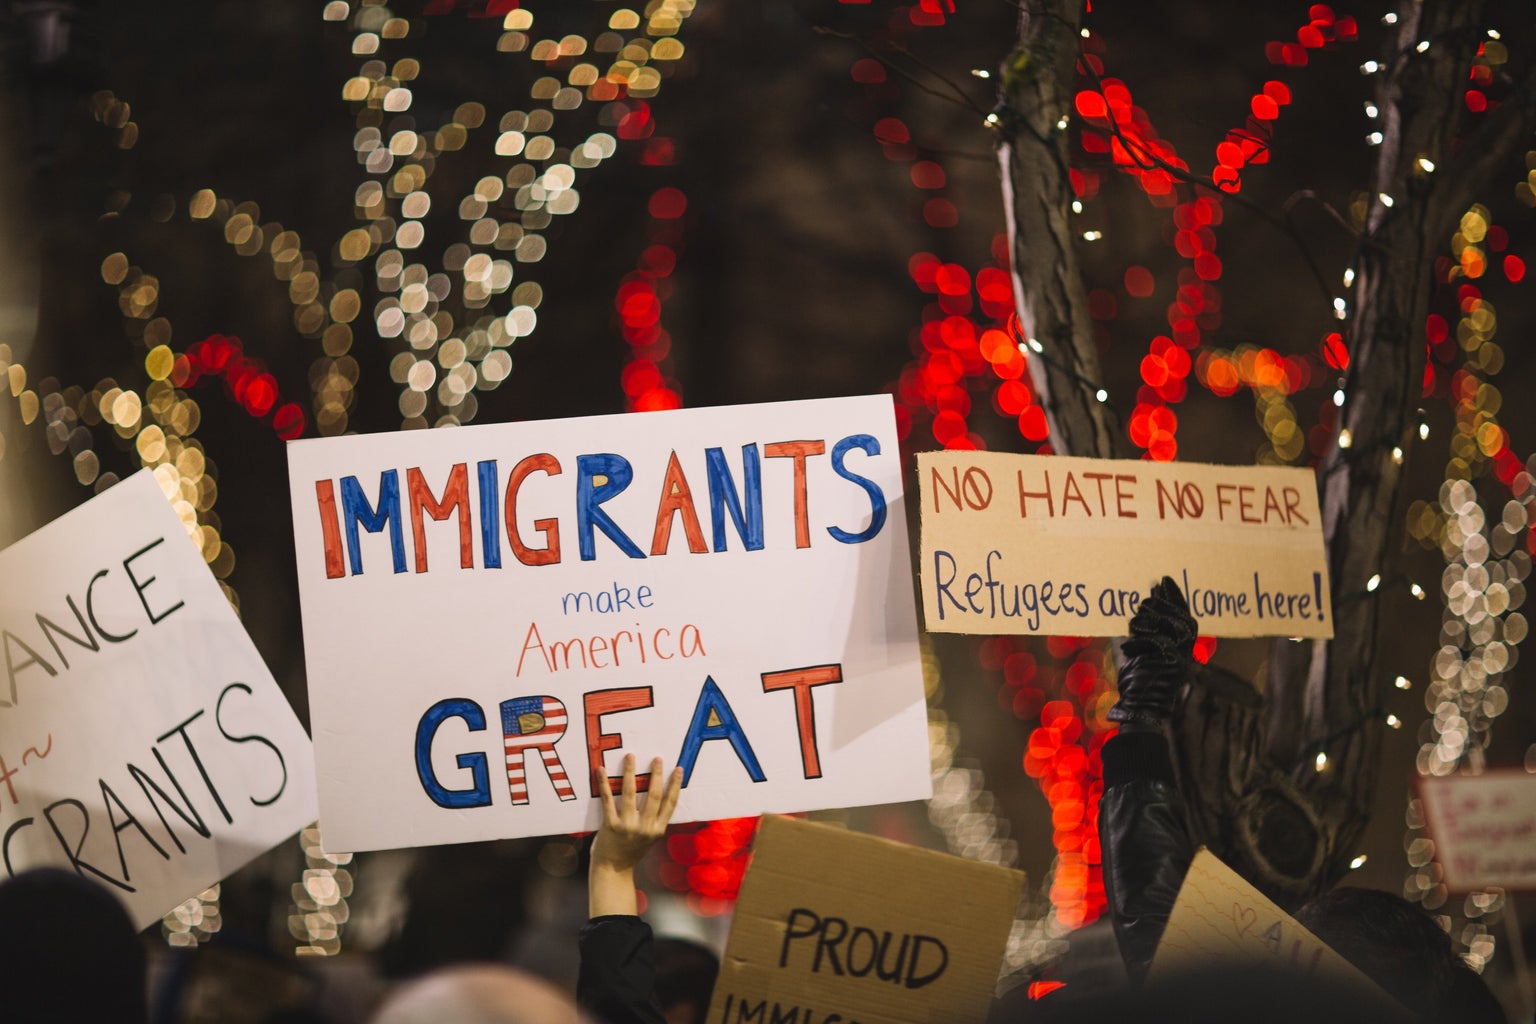 Sign Immigrants make America Great